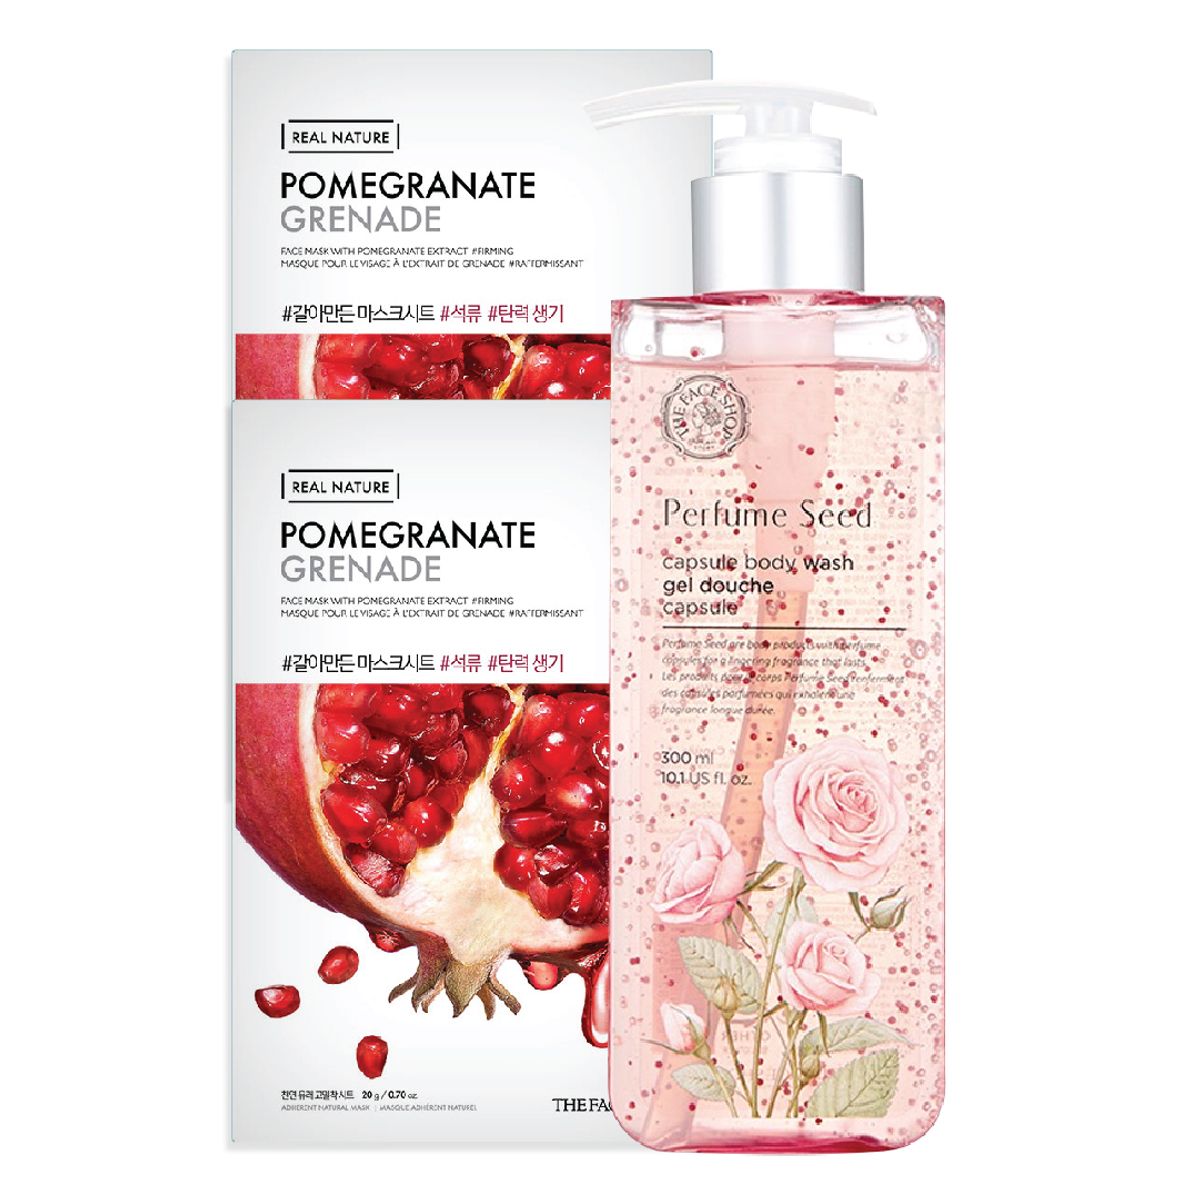 gift-sua-tam-dang-gel-huong-nuoc-hoa-thefaceshop-perfume-seed-capsule-body-wash-300ml-2-mat-na-real-nature-pomegranate-1